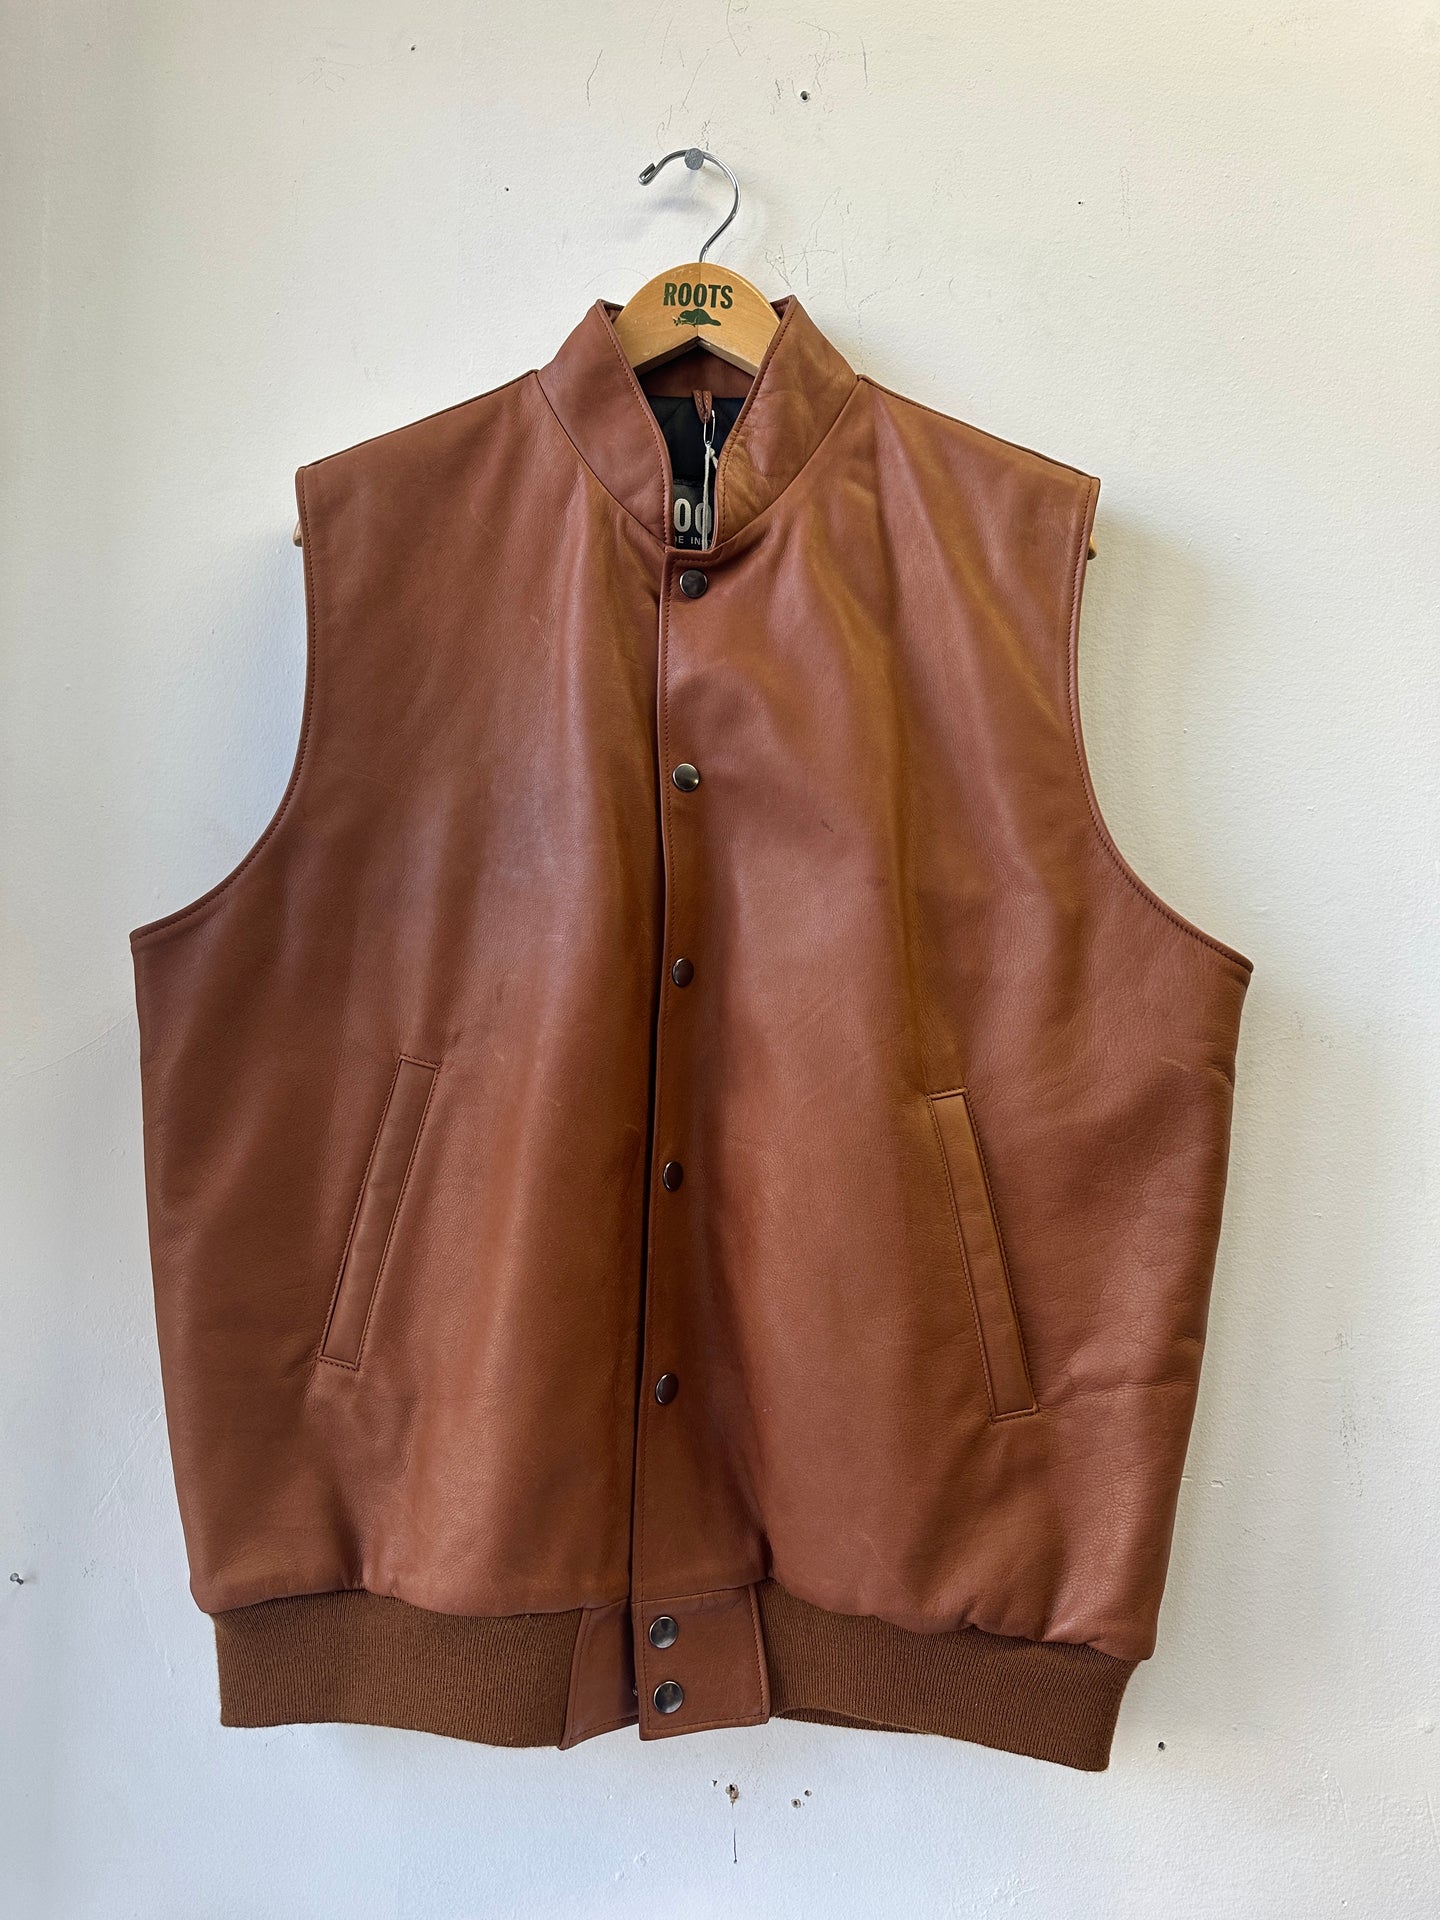 90s Roots Leather Vest